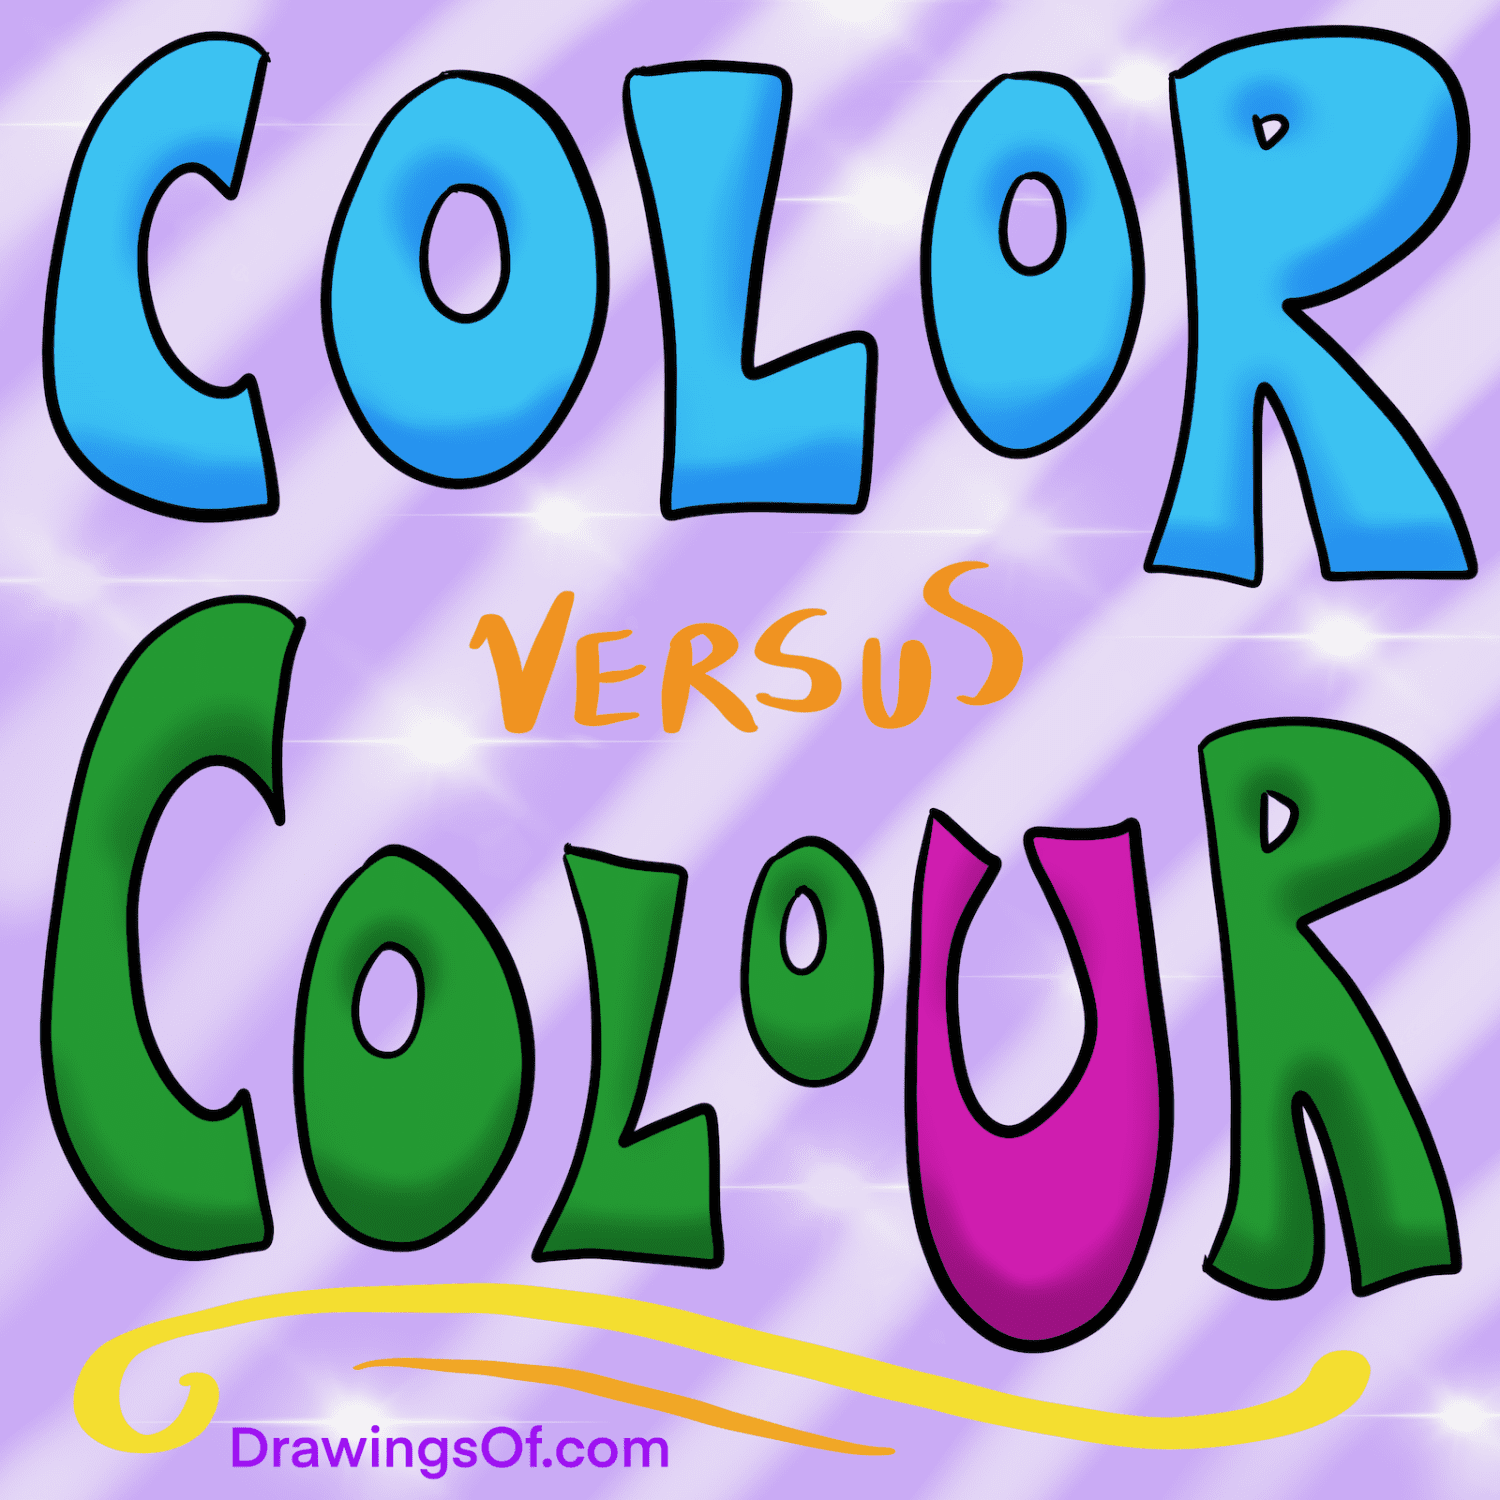 Color or colour